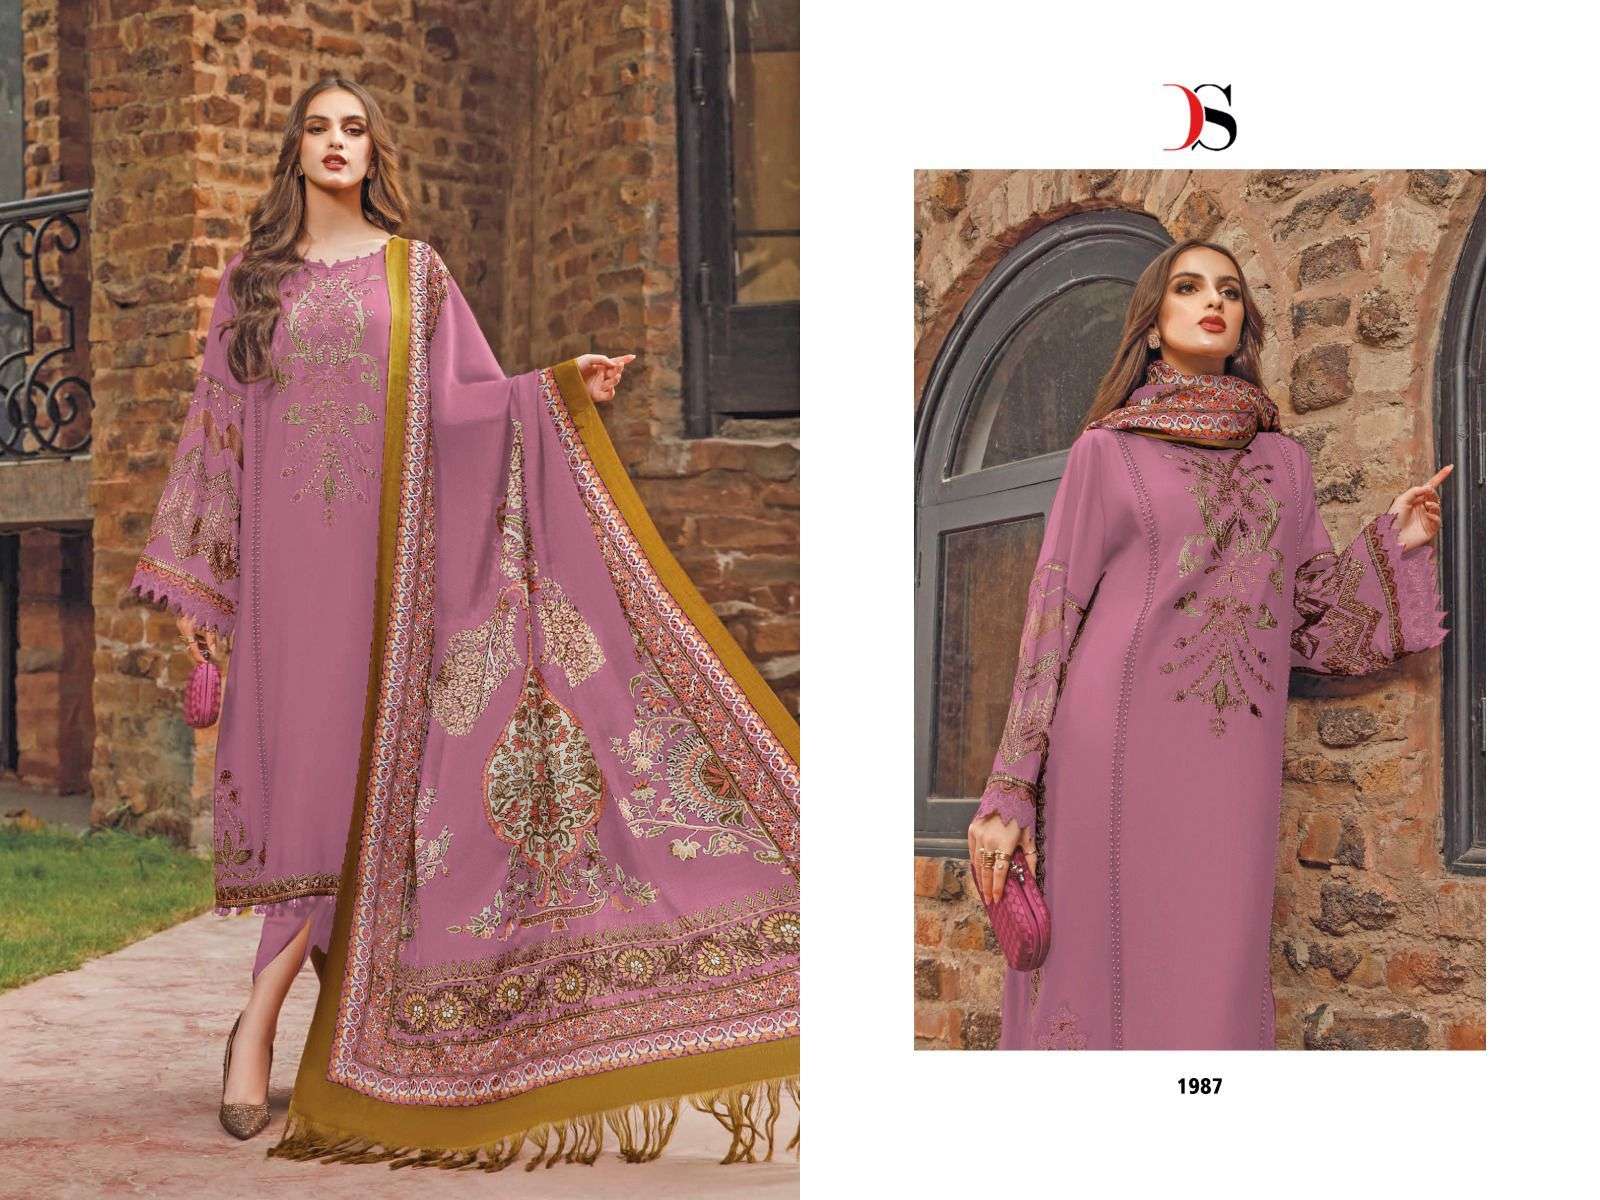 deepsy suits maria b nx 1983-1987 series pure cotton designer pakistani salwar suits new catalogue surat 